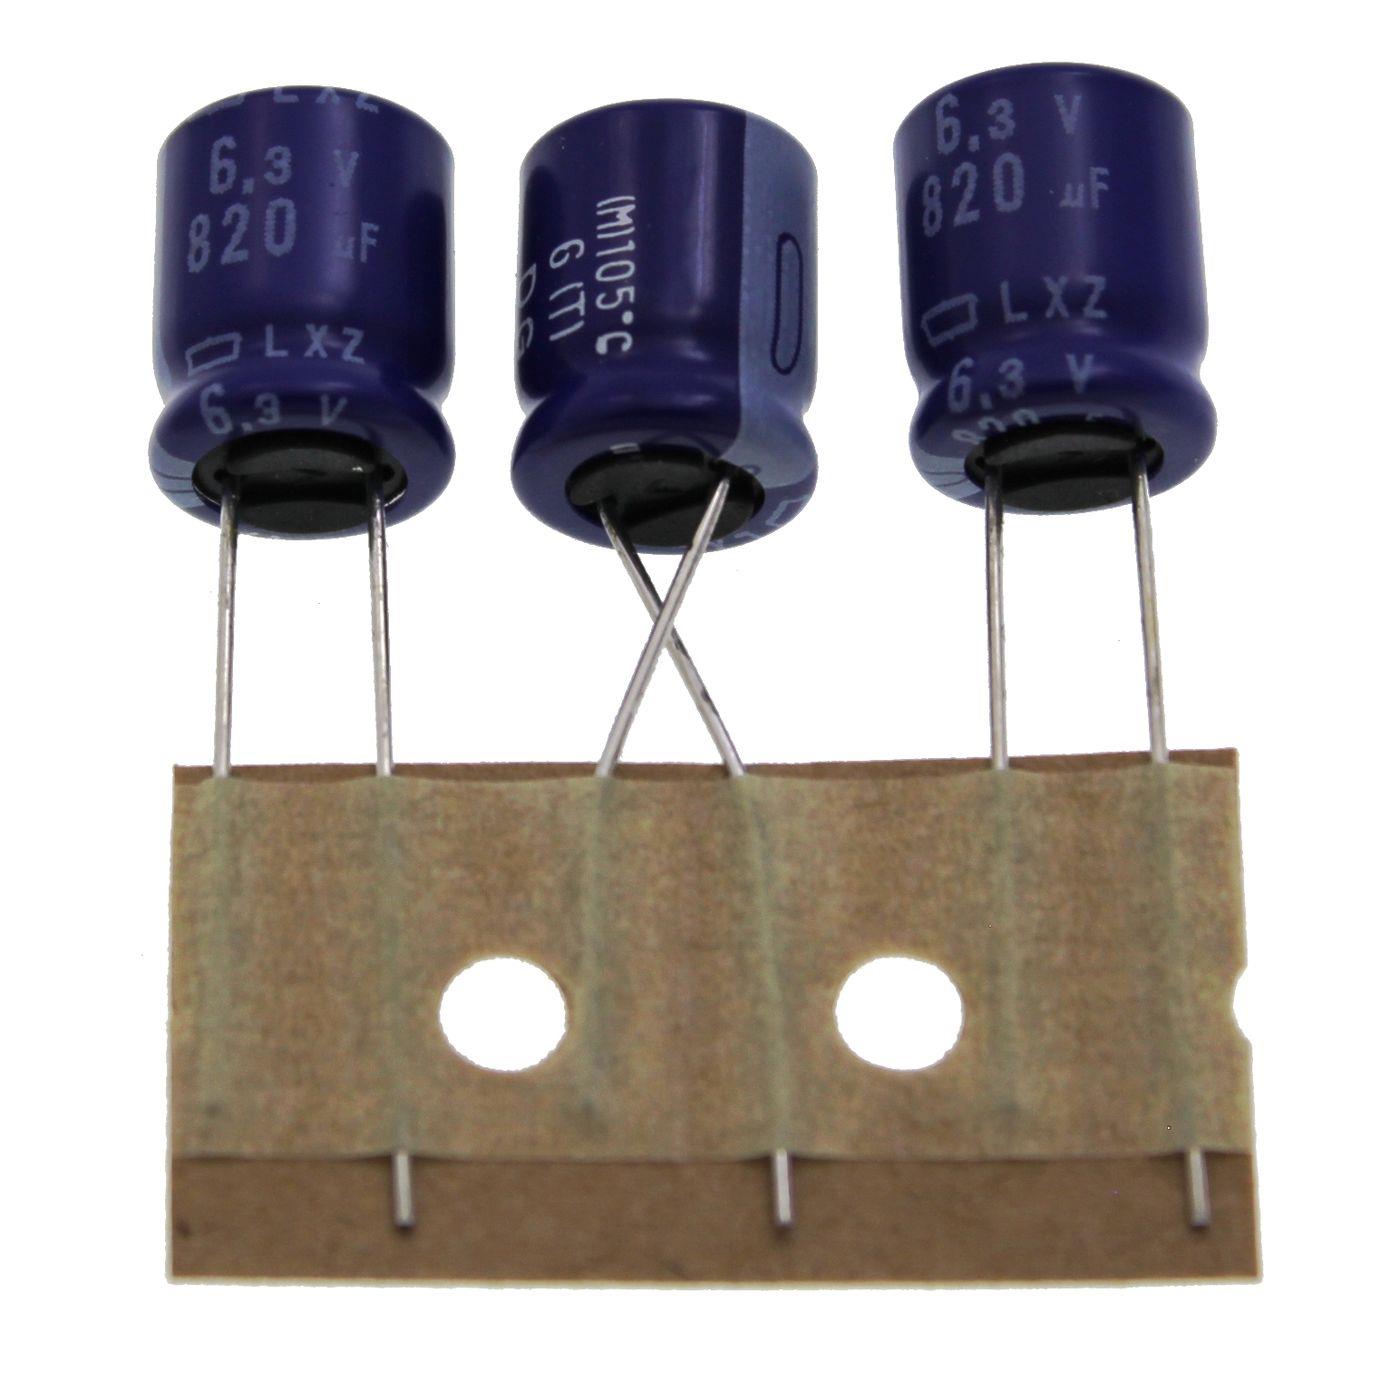 Electrolytic capacitor Radial 820µF 6,3V 105°C ELXZ6R3ETD821MJC5S d10x12,5mm 820uF